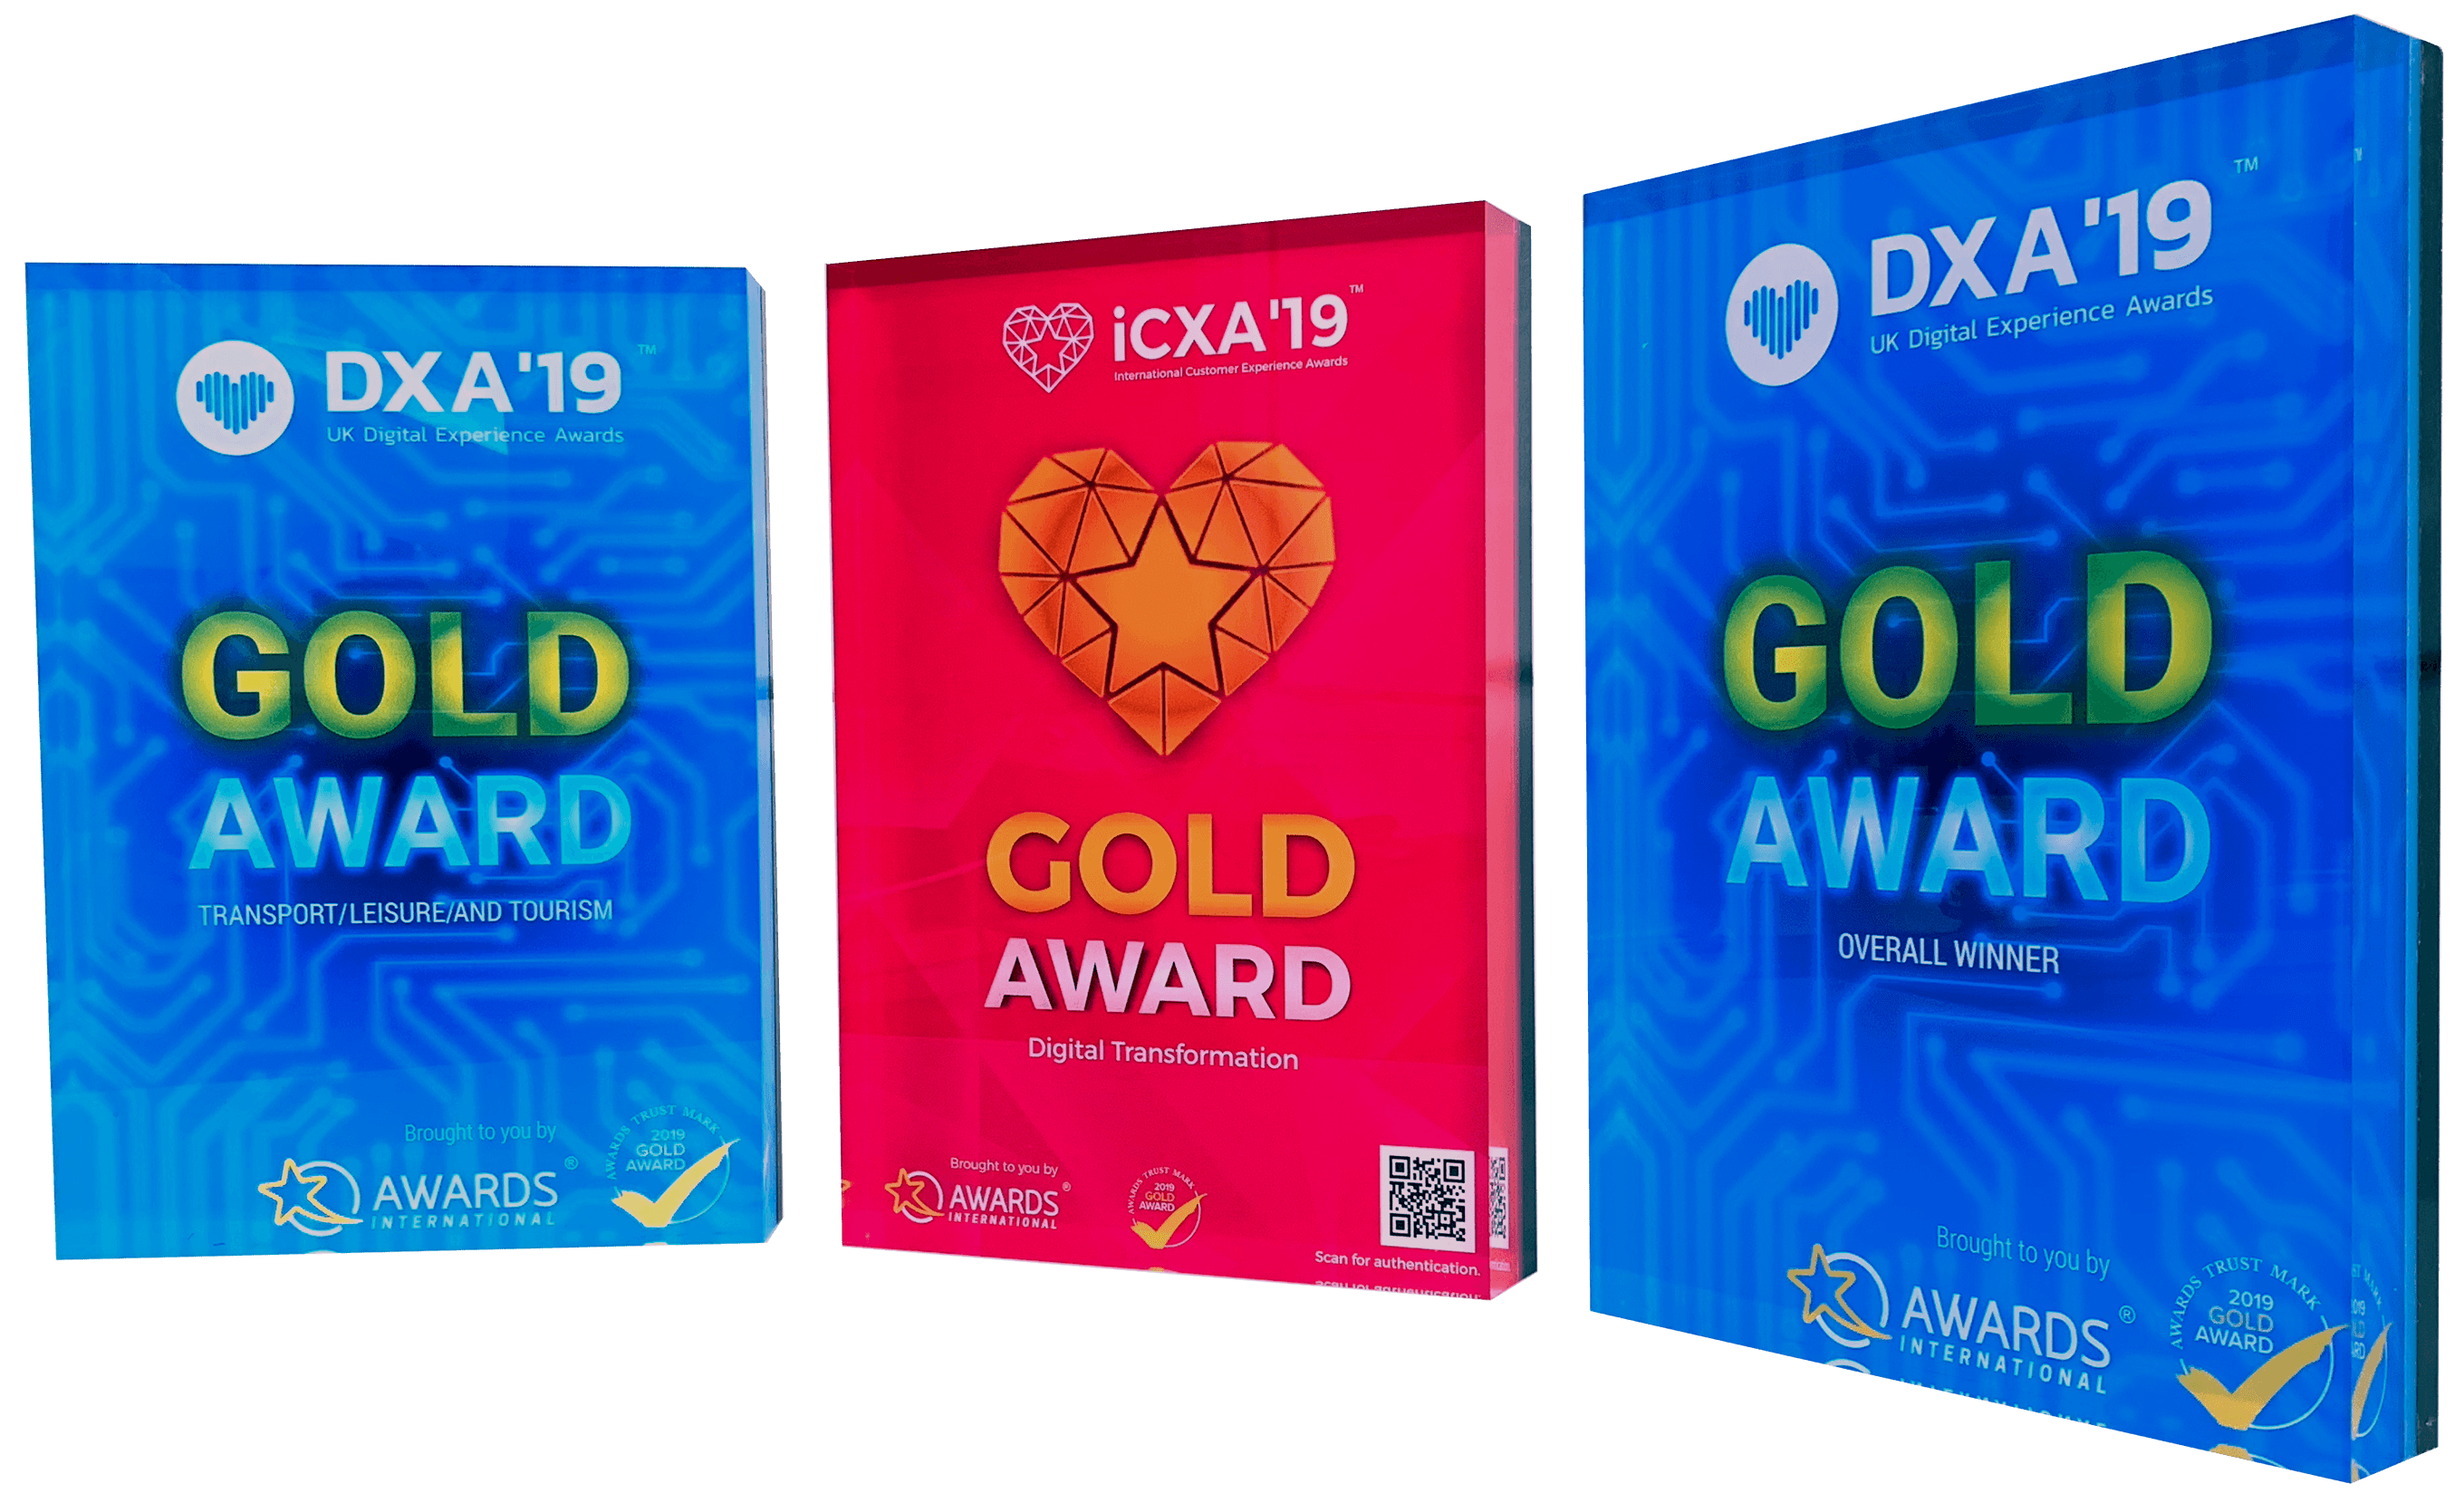 DXA 19 - Gold Award